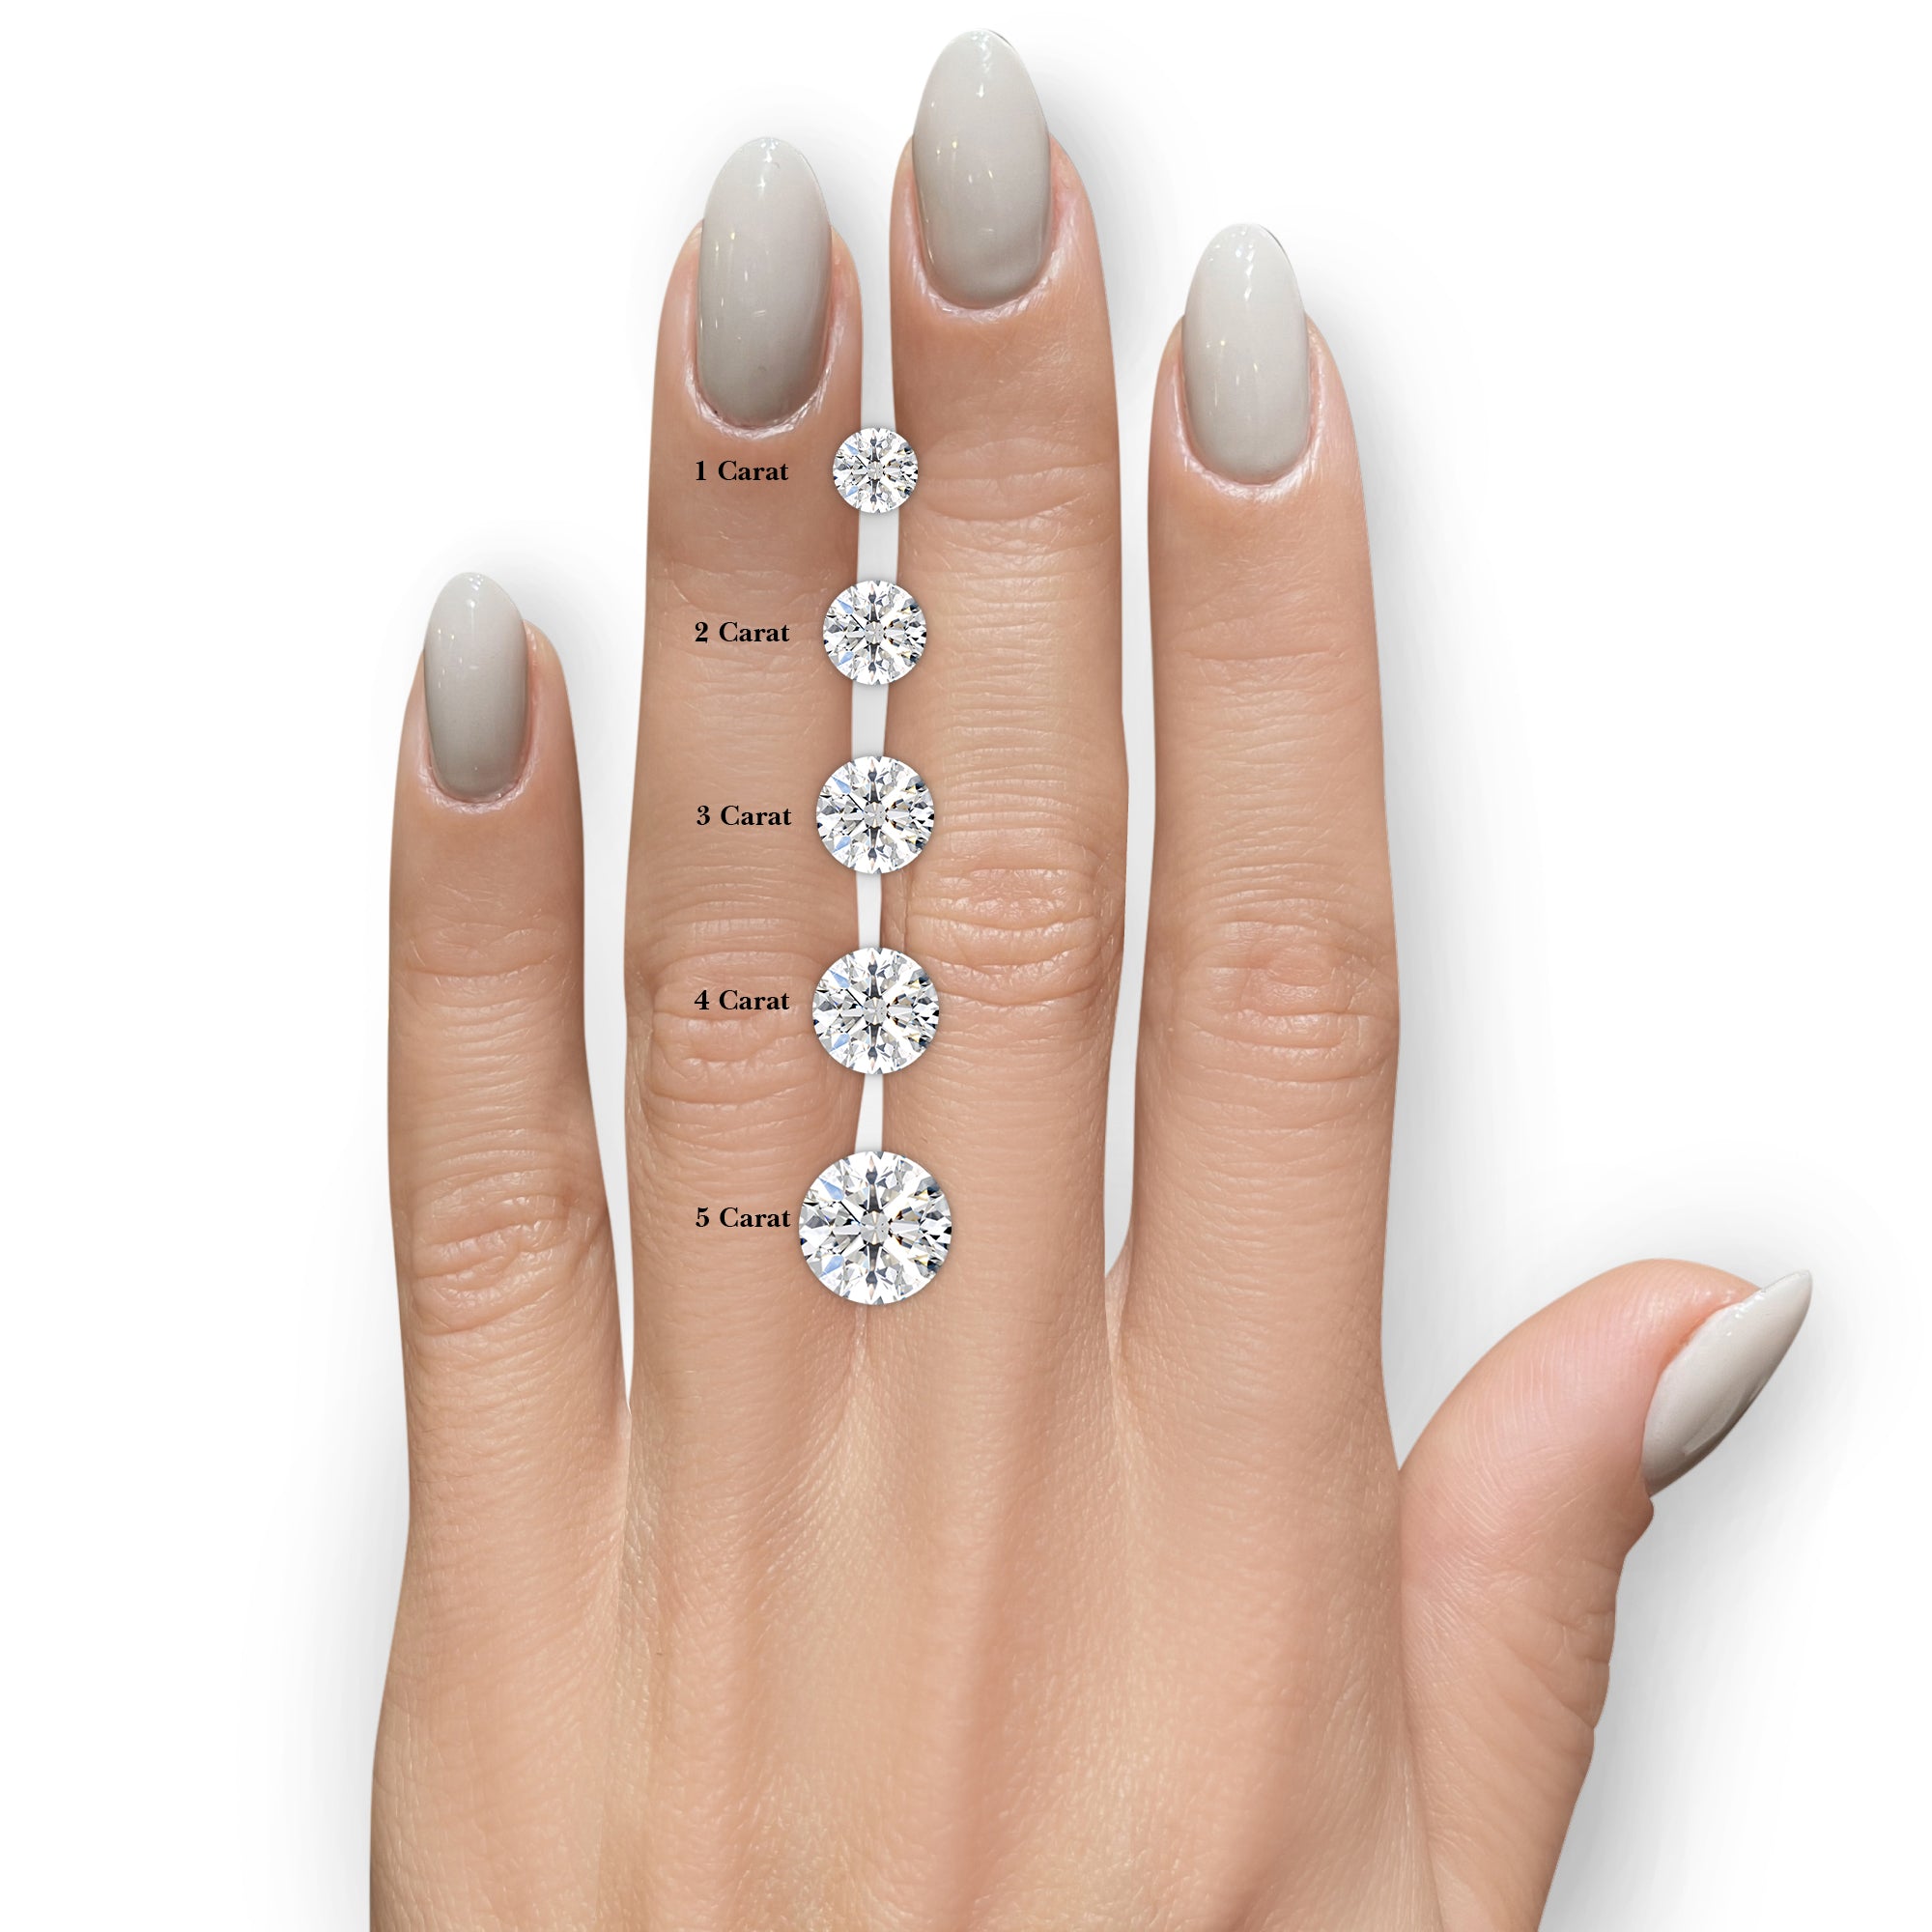 Paisley Diamond Engagement Ring -14K White Gold